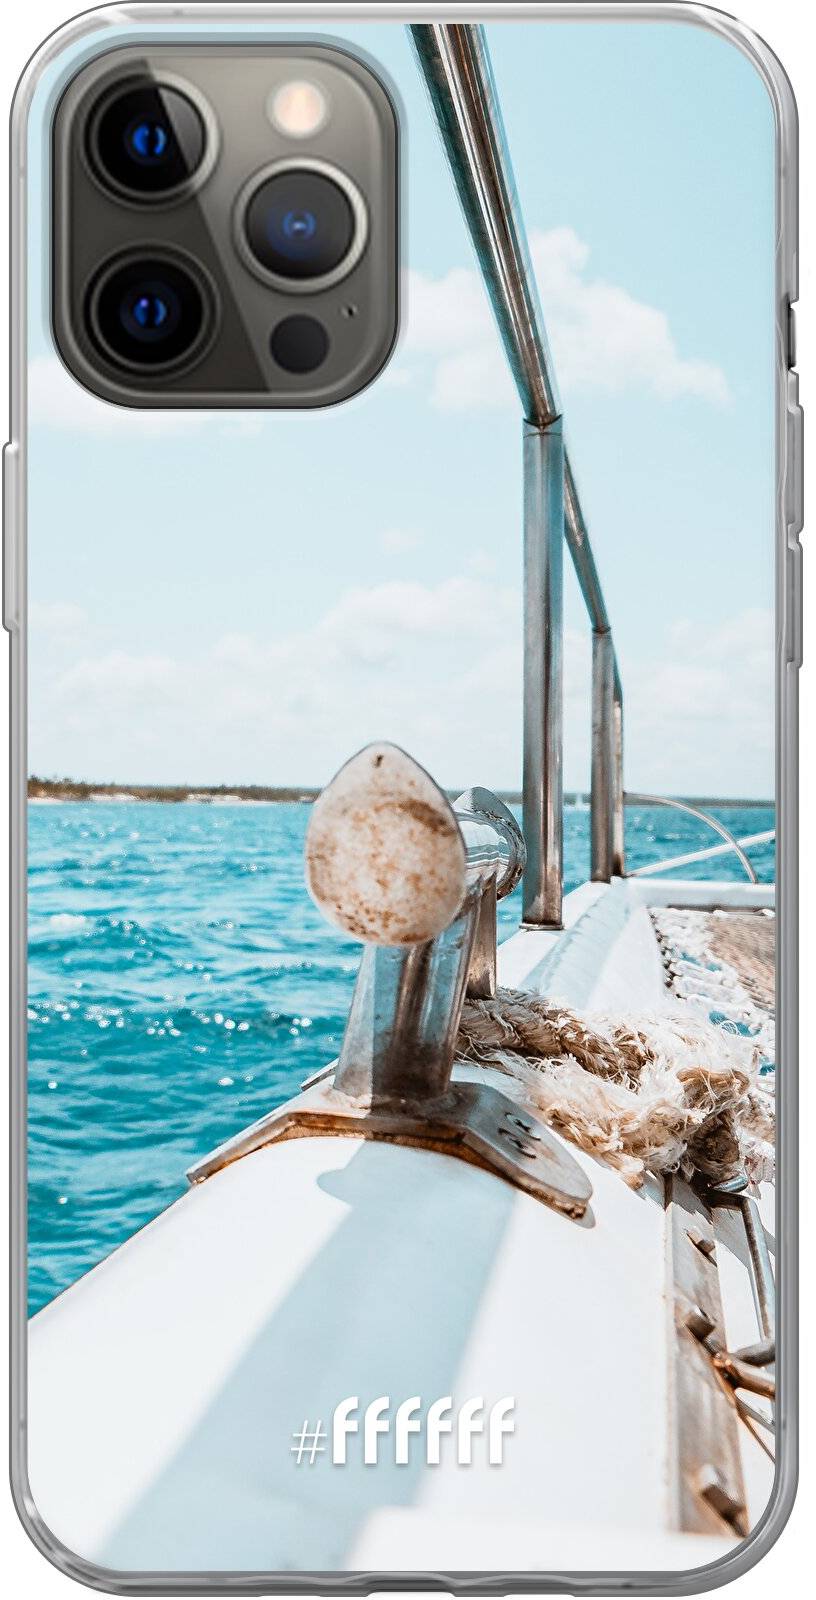 Sailing iPhone 12 Pro Max